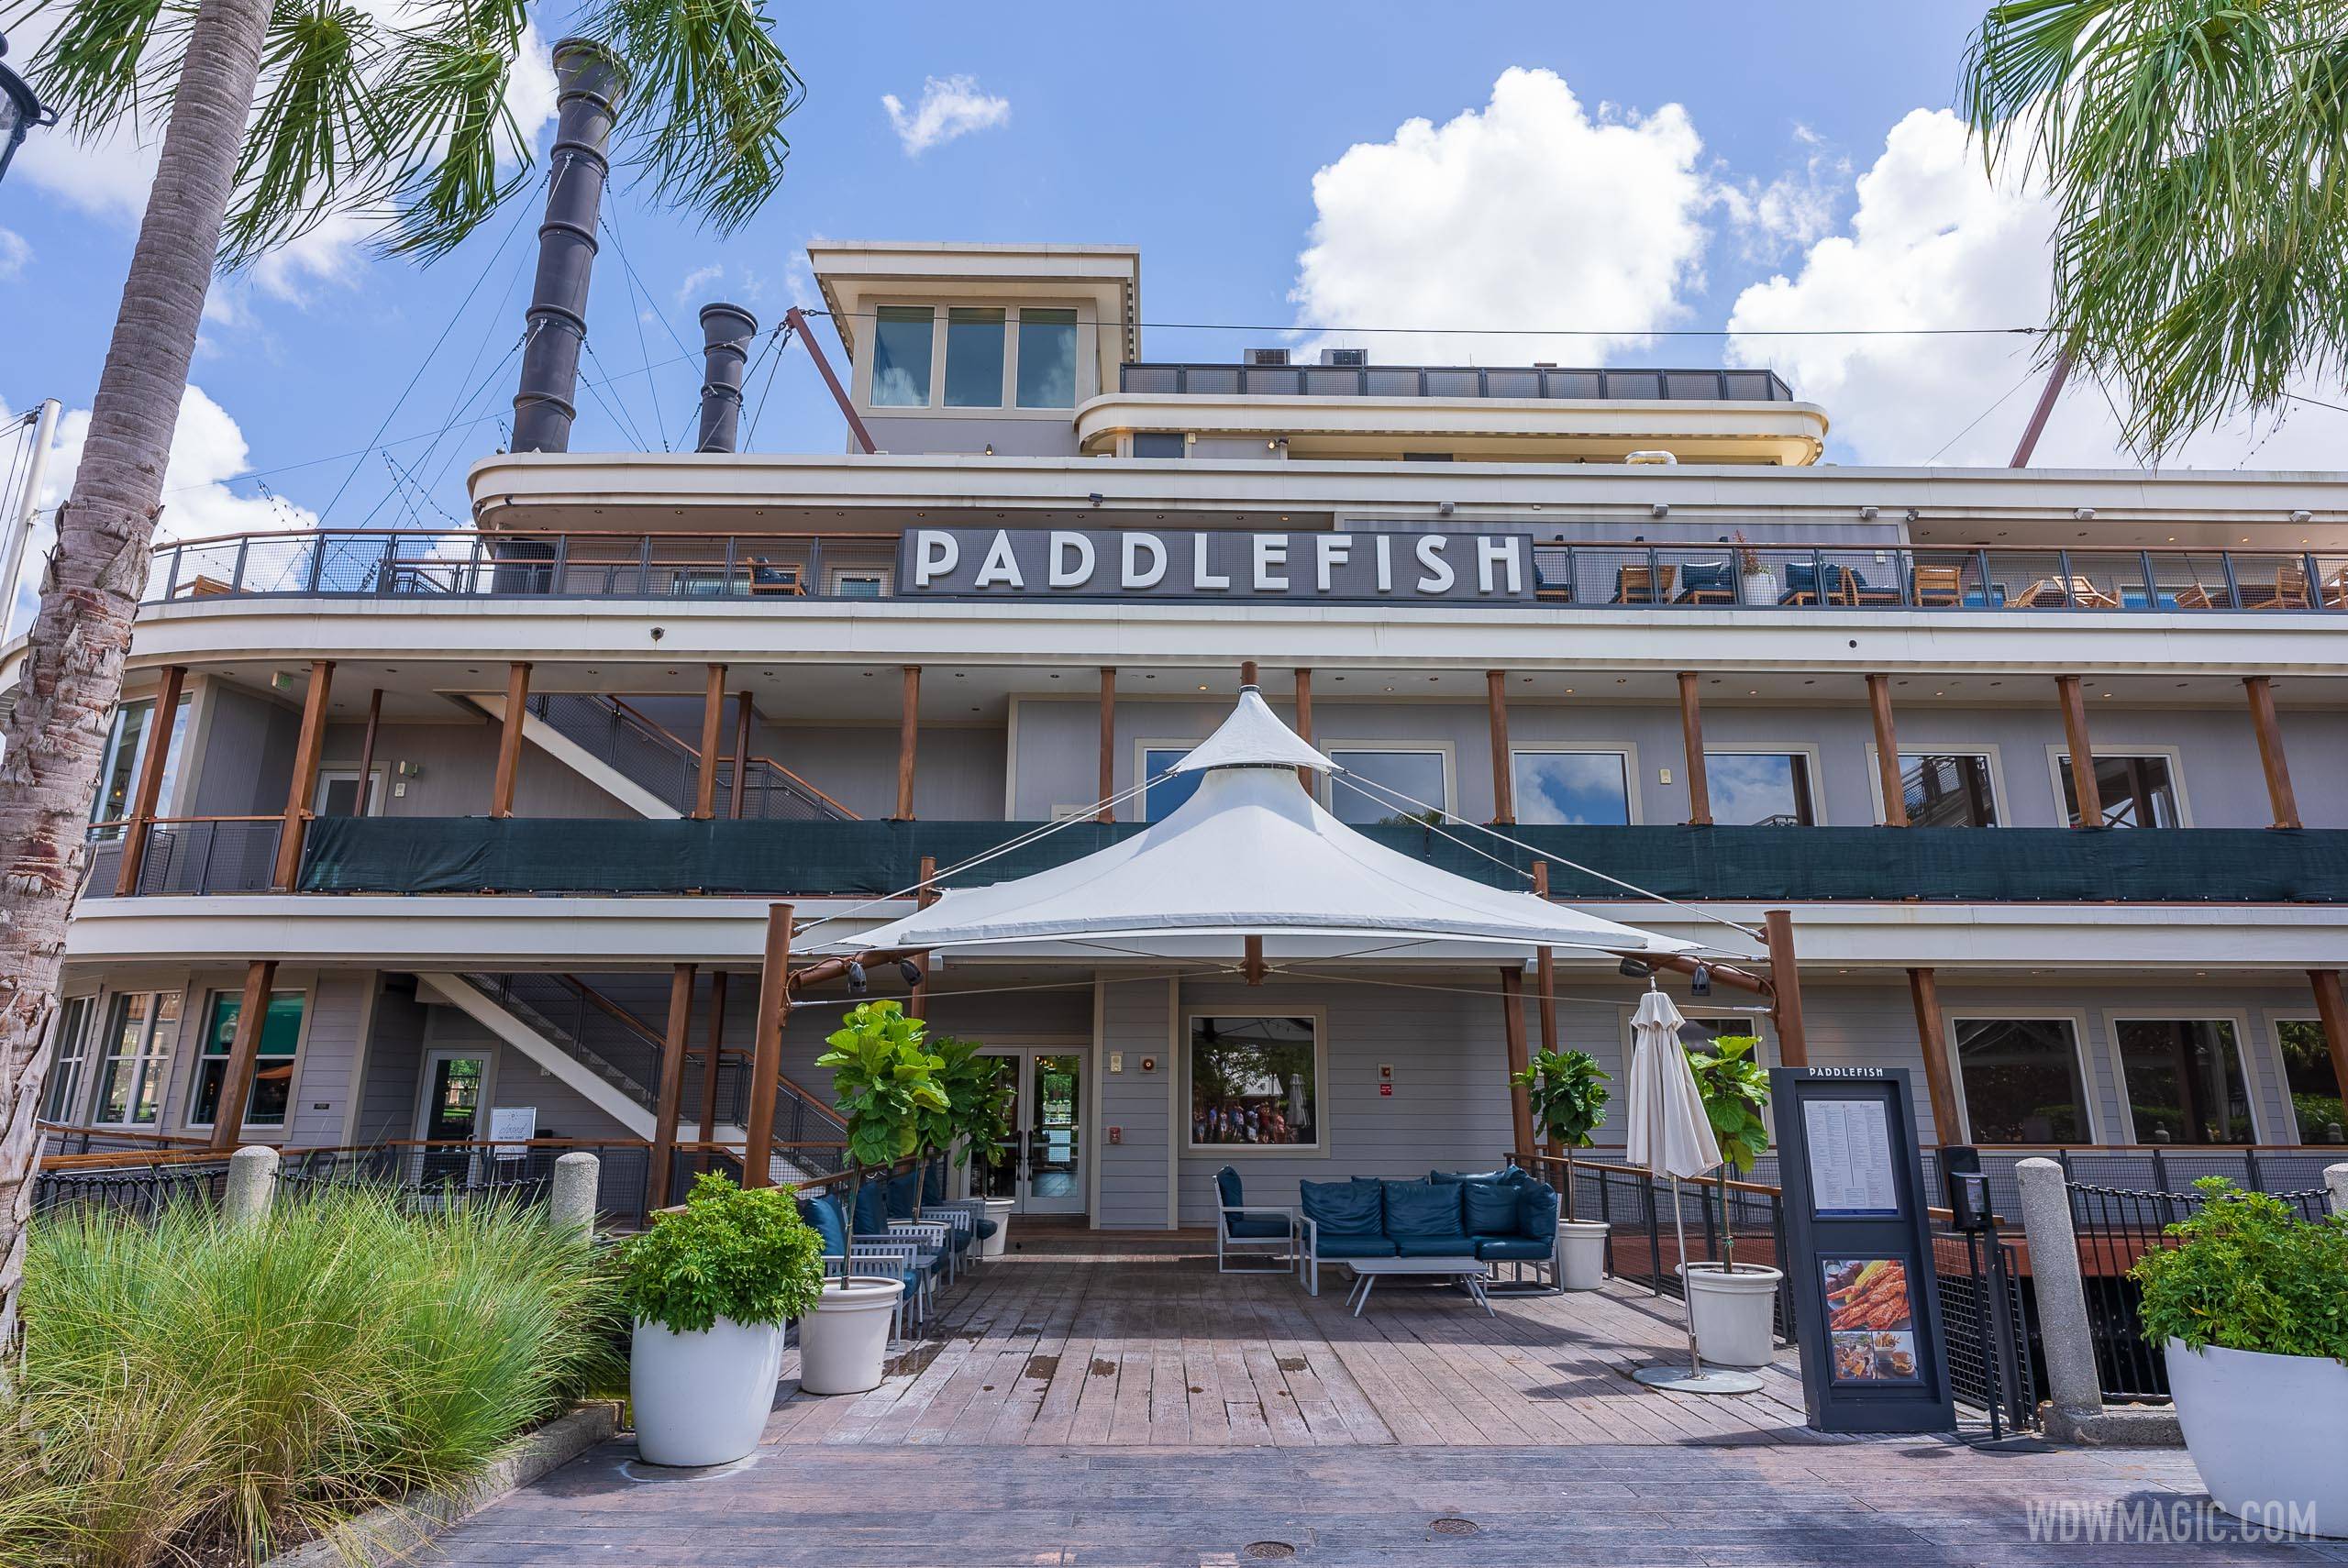 Paddlefish exterior refurbishment - June 28 2021